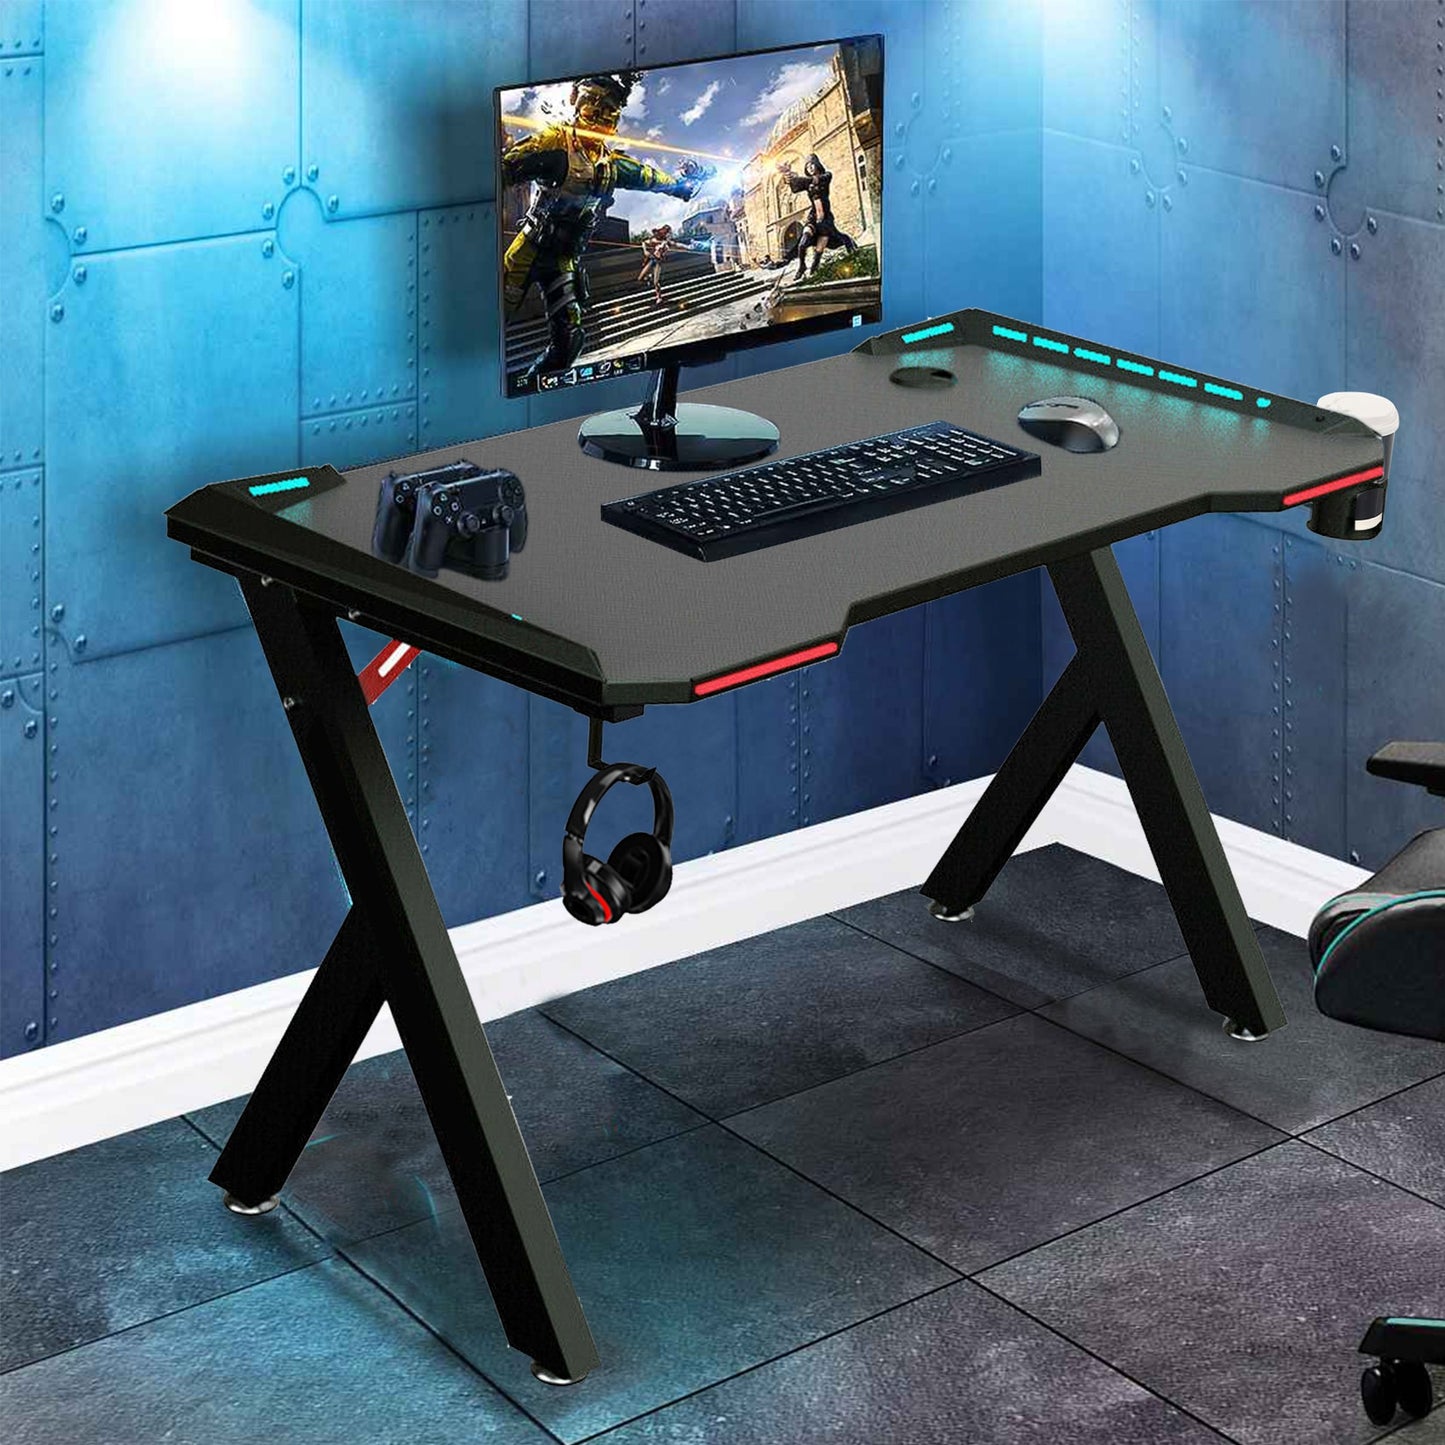 Computer Gaming Desk